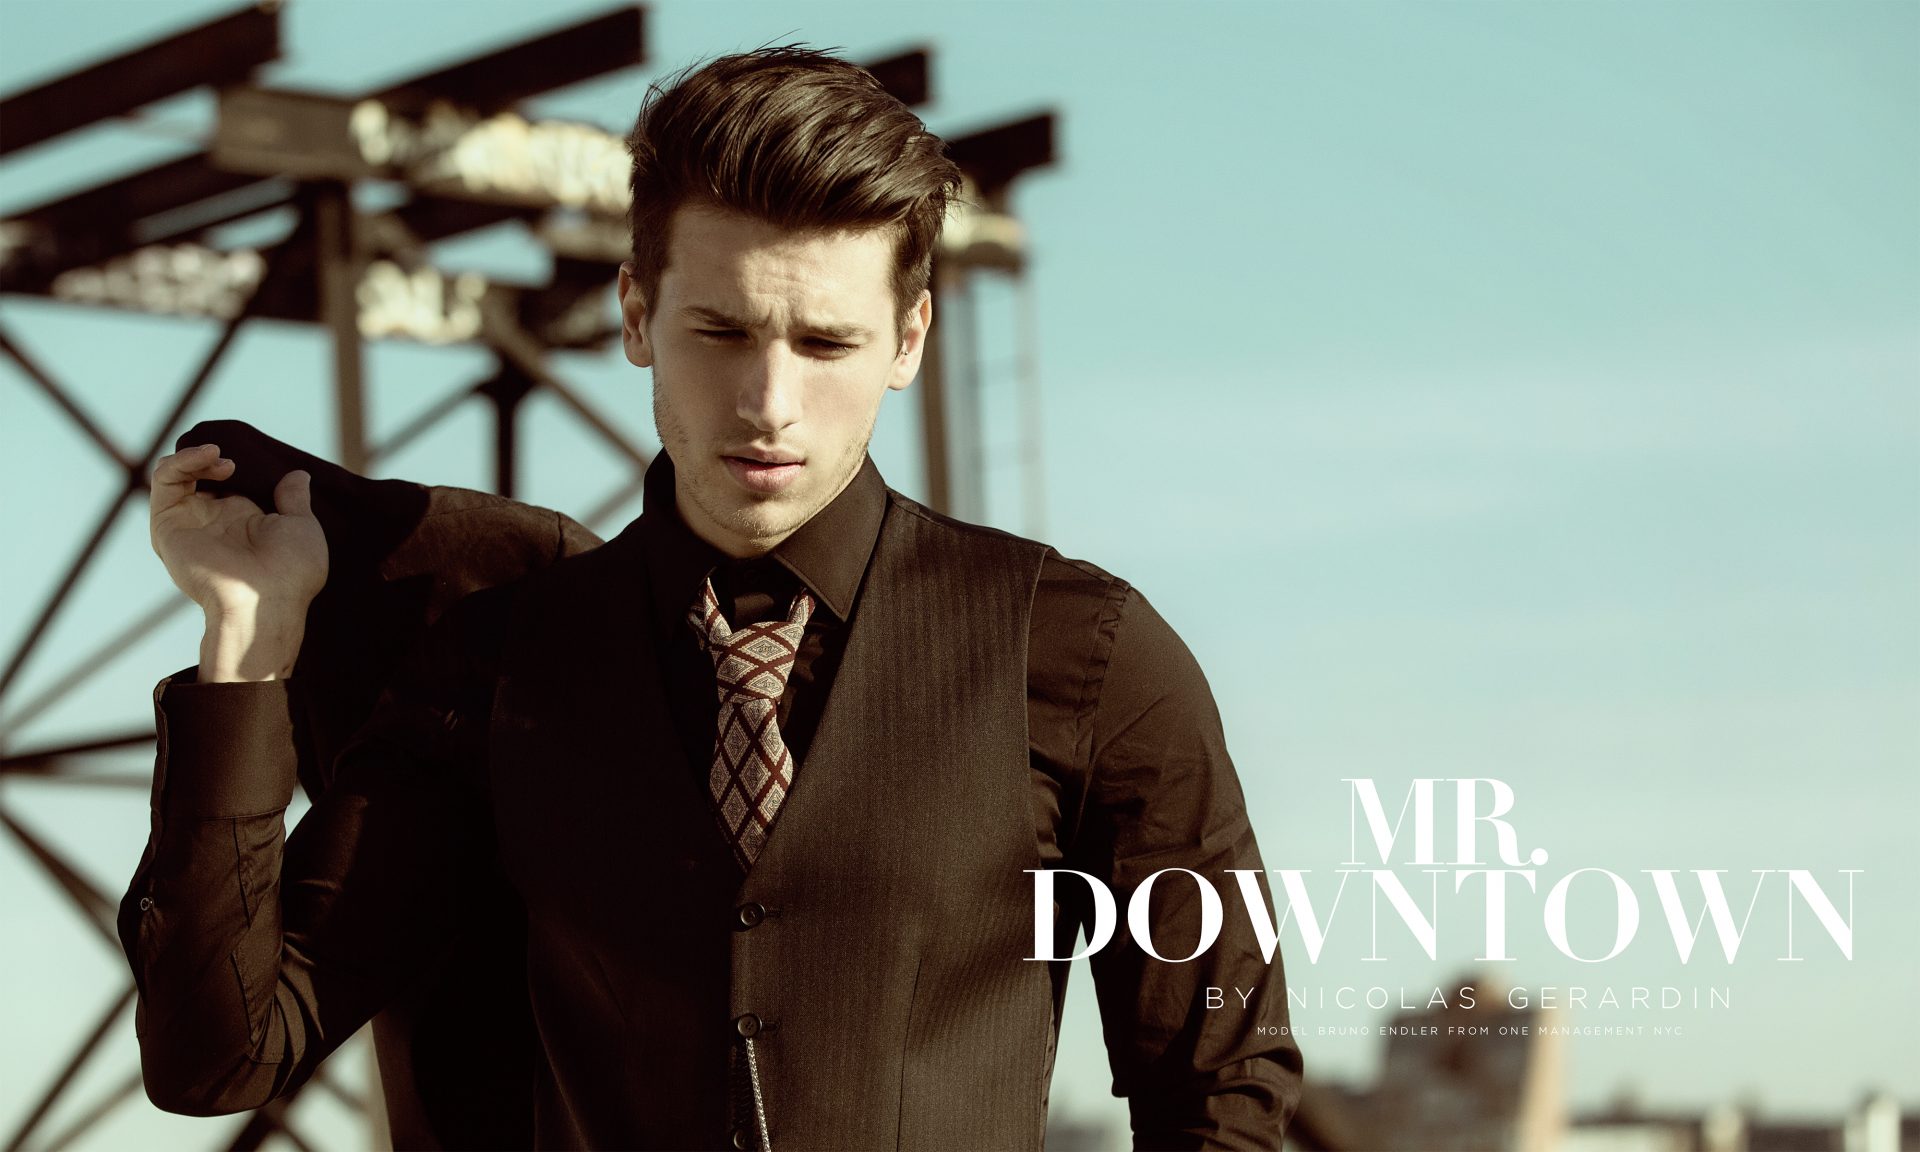 Introducing: Nicolas Gerardin & Mr. Downtown